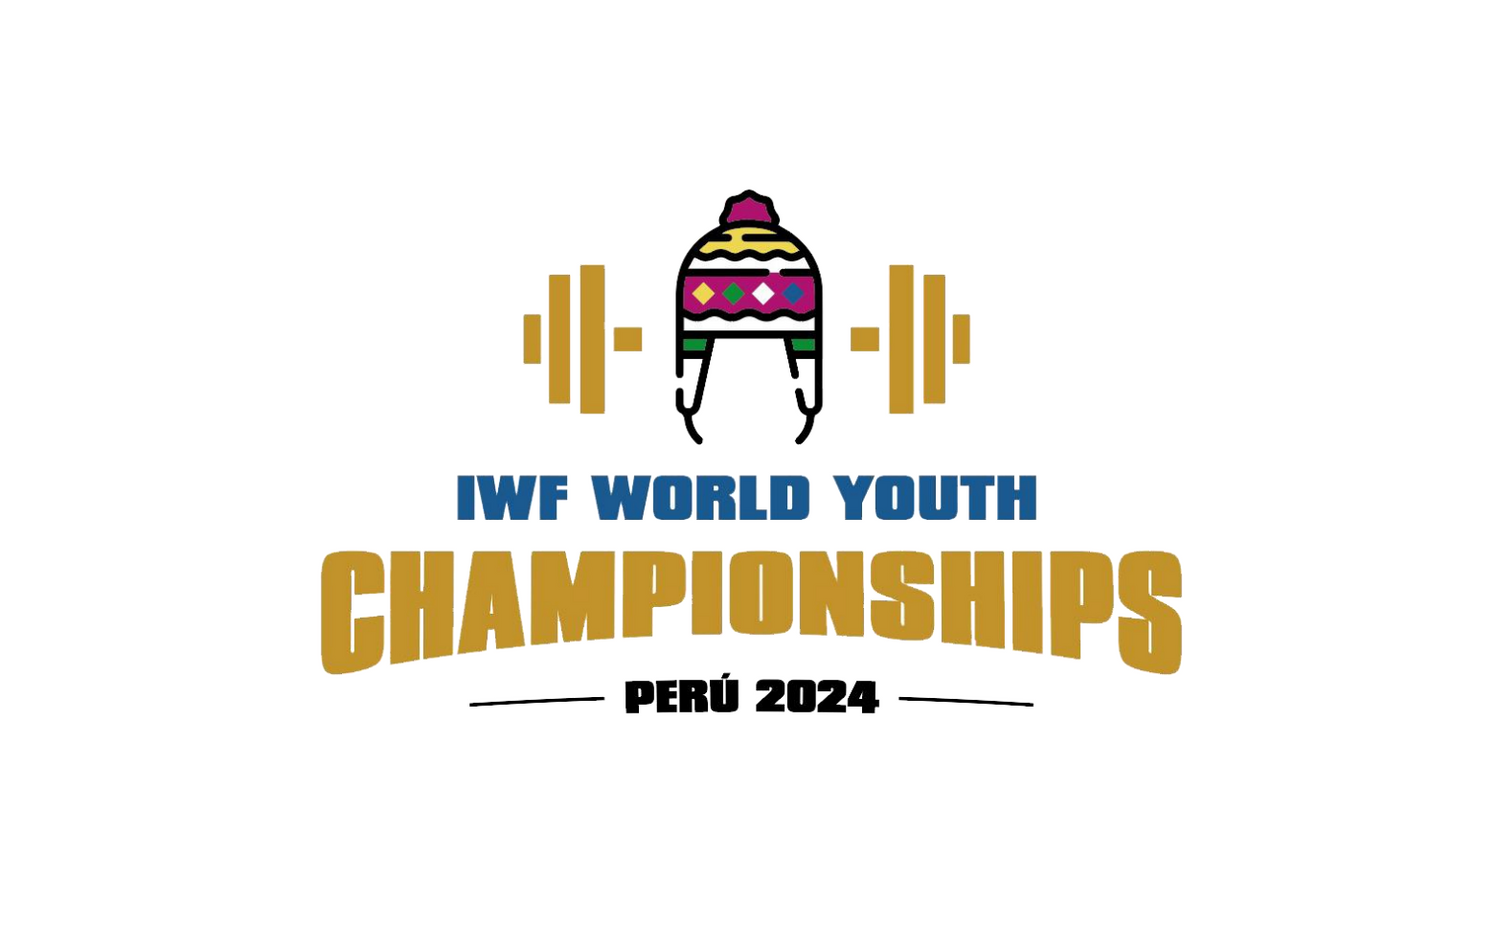 IWF world youth championships logo